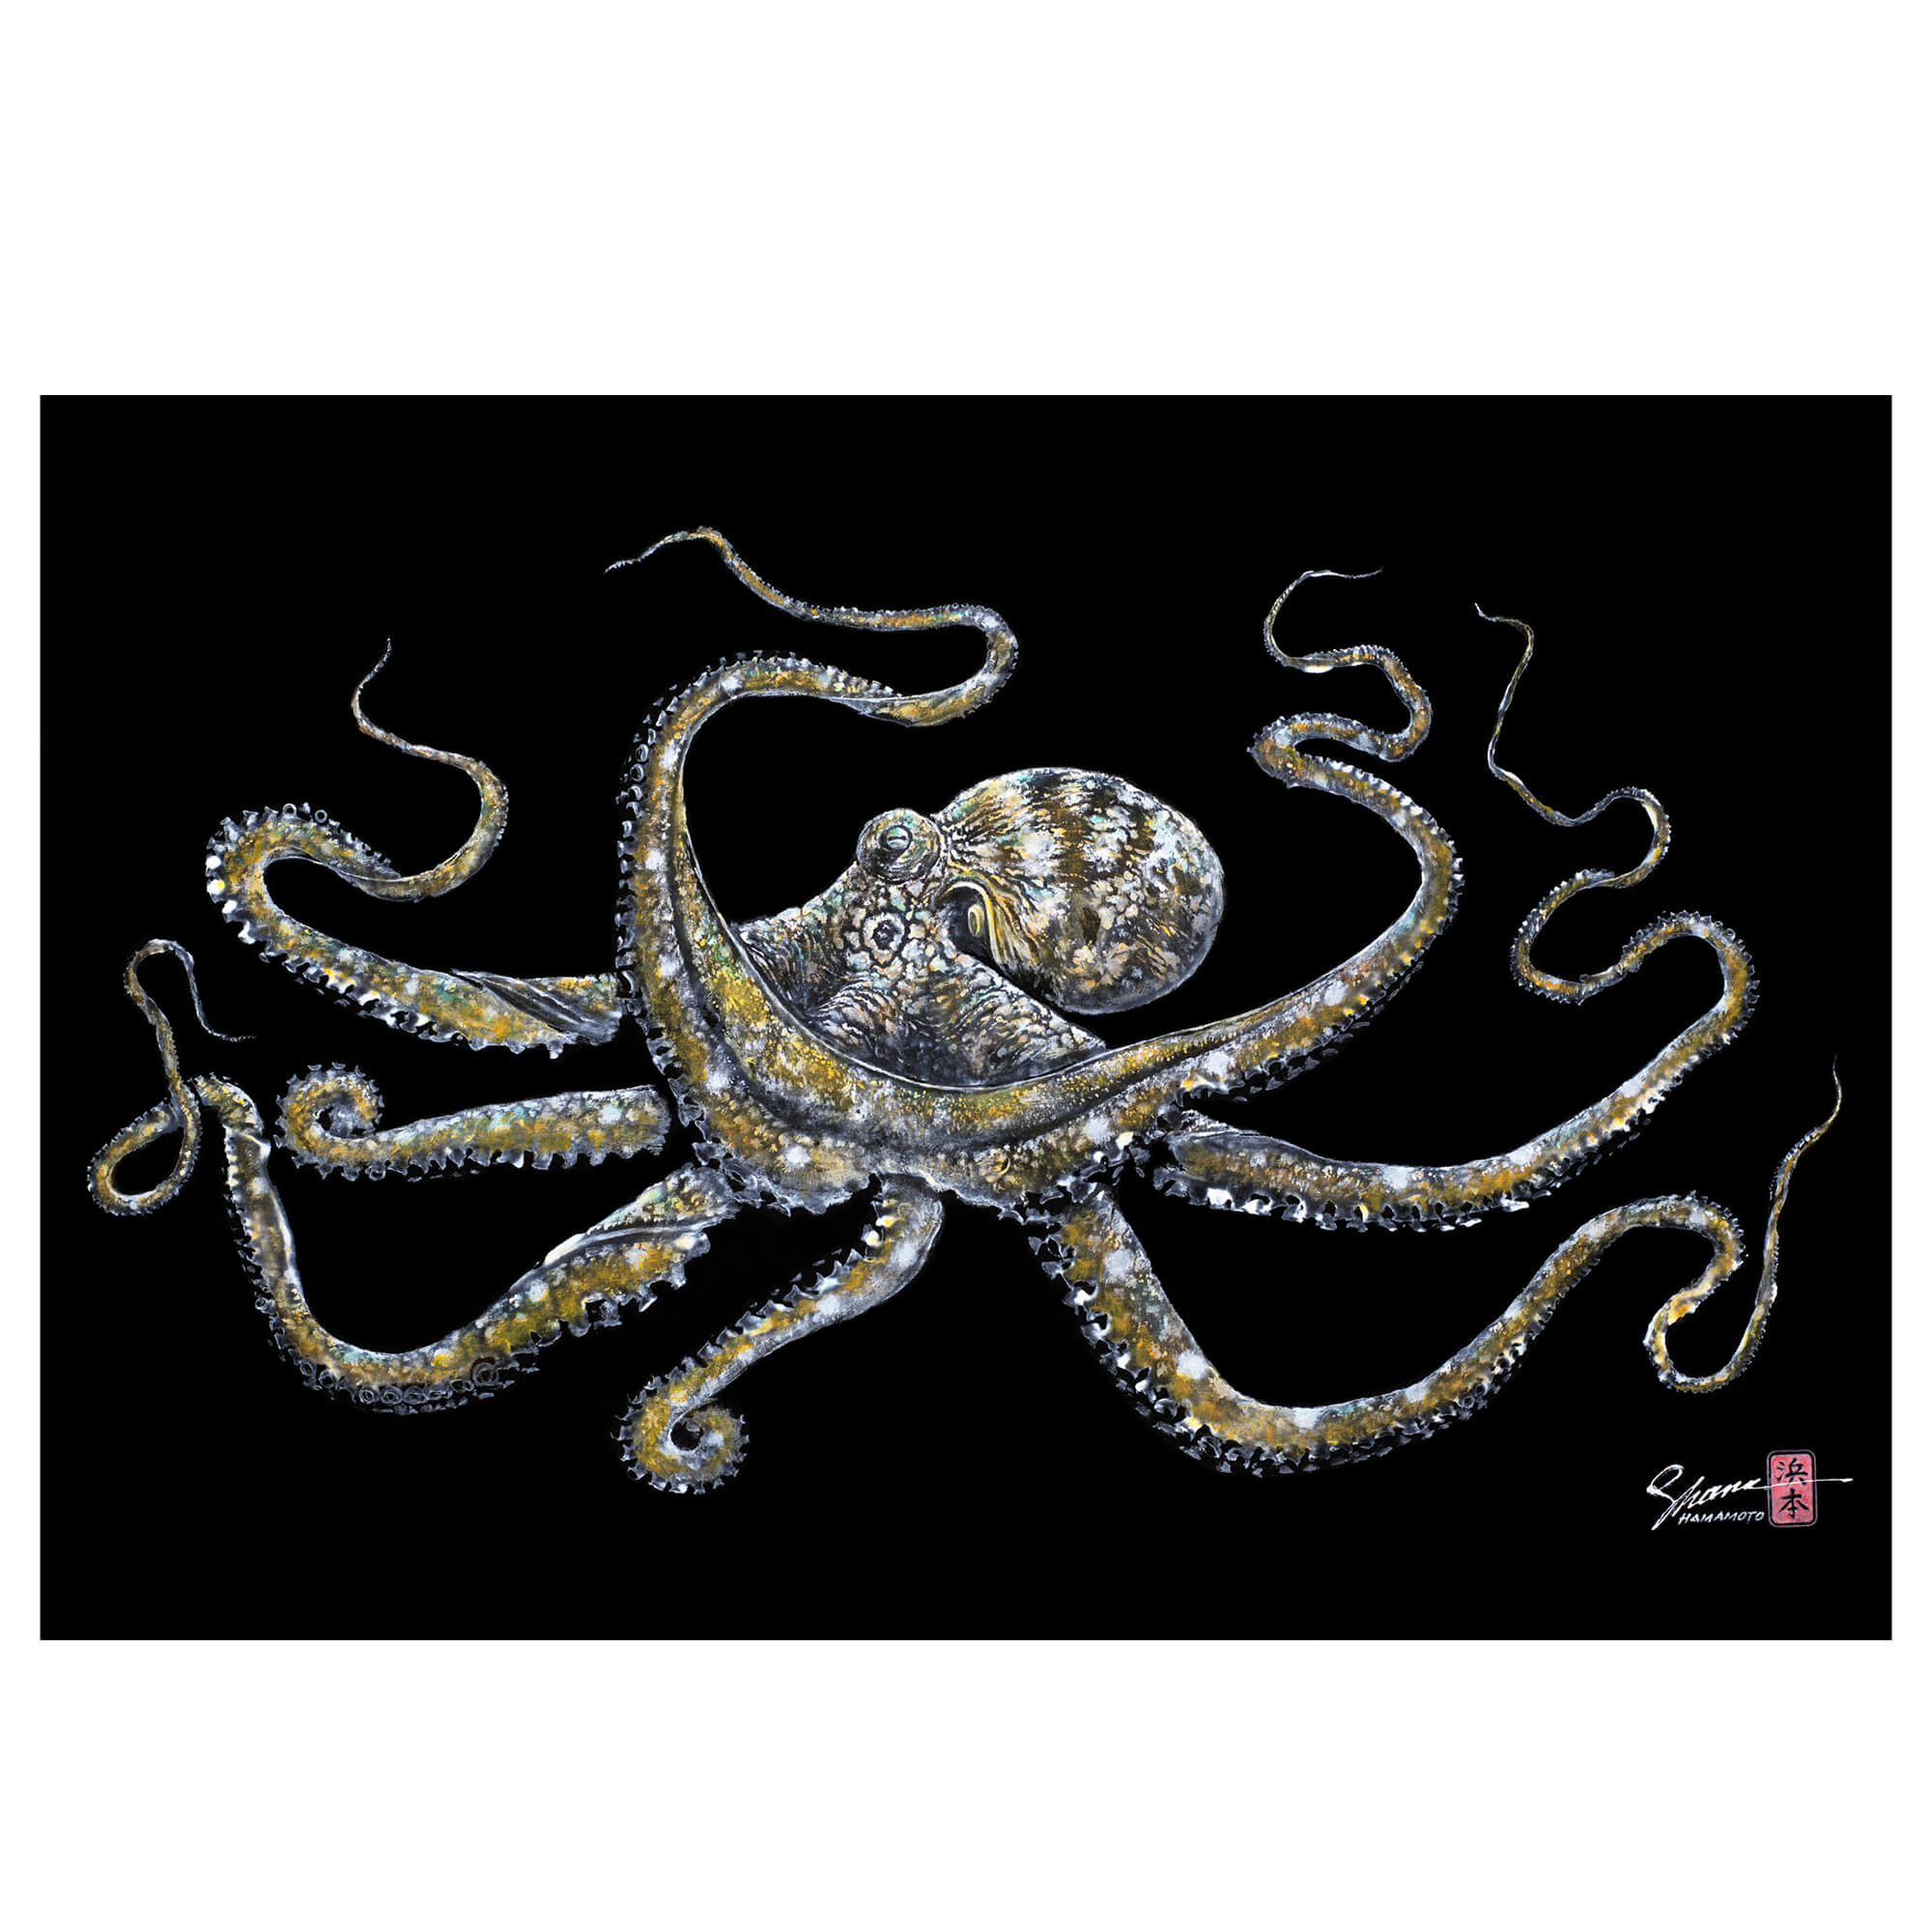 Matted print of Tako (octopus) by Hawaii gyotaku artist Shane Hamamoto